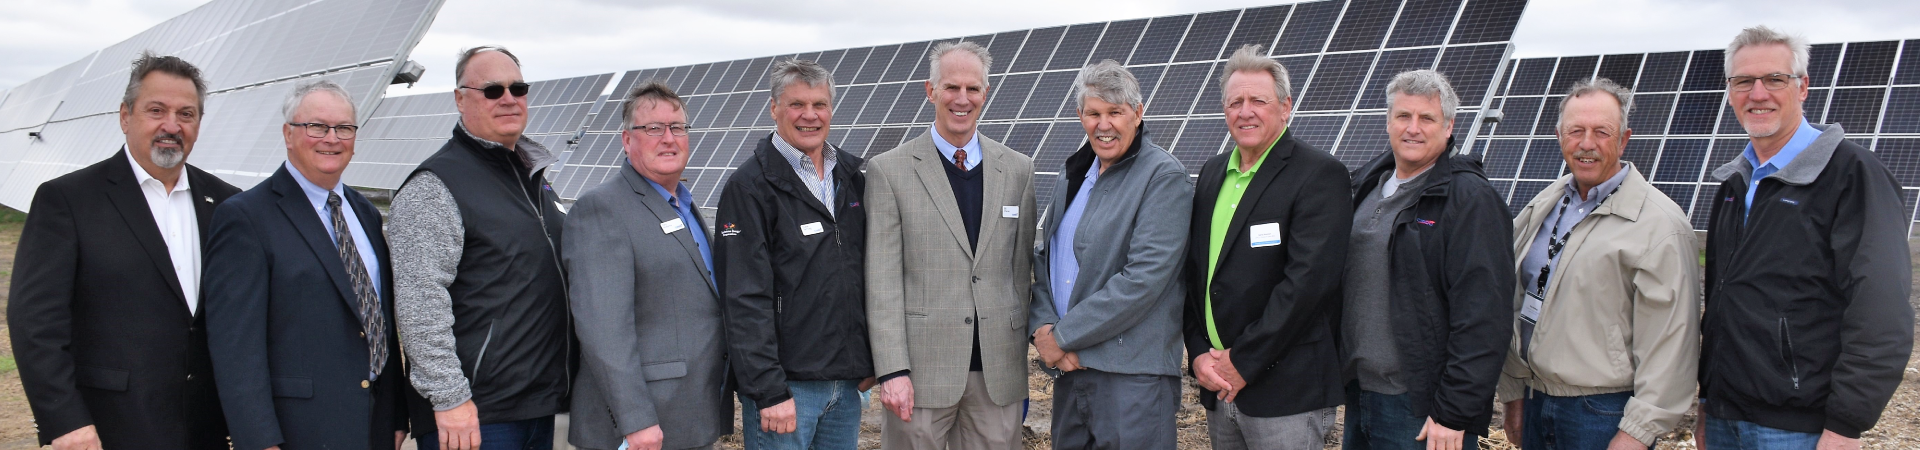 CIPCO Board of Directors and CEO at Wapello solar ribbon cutting